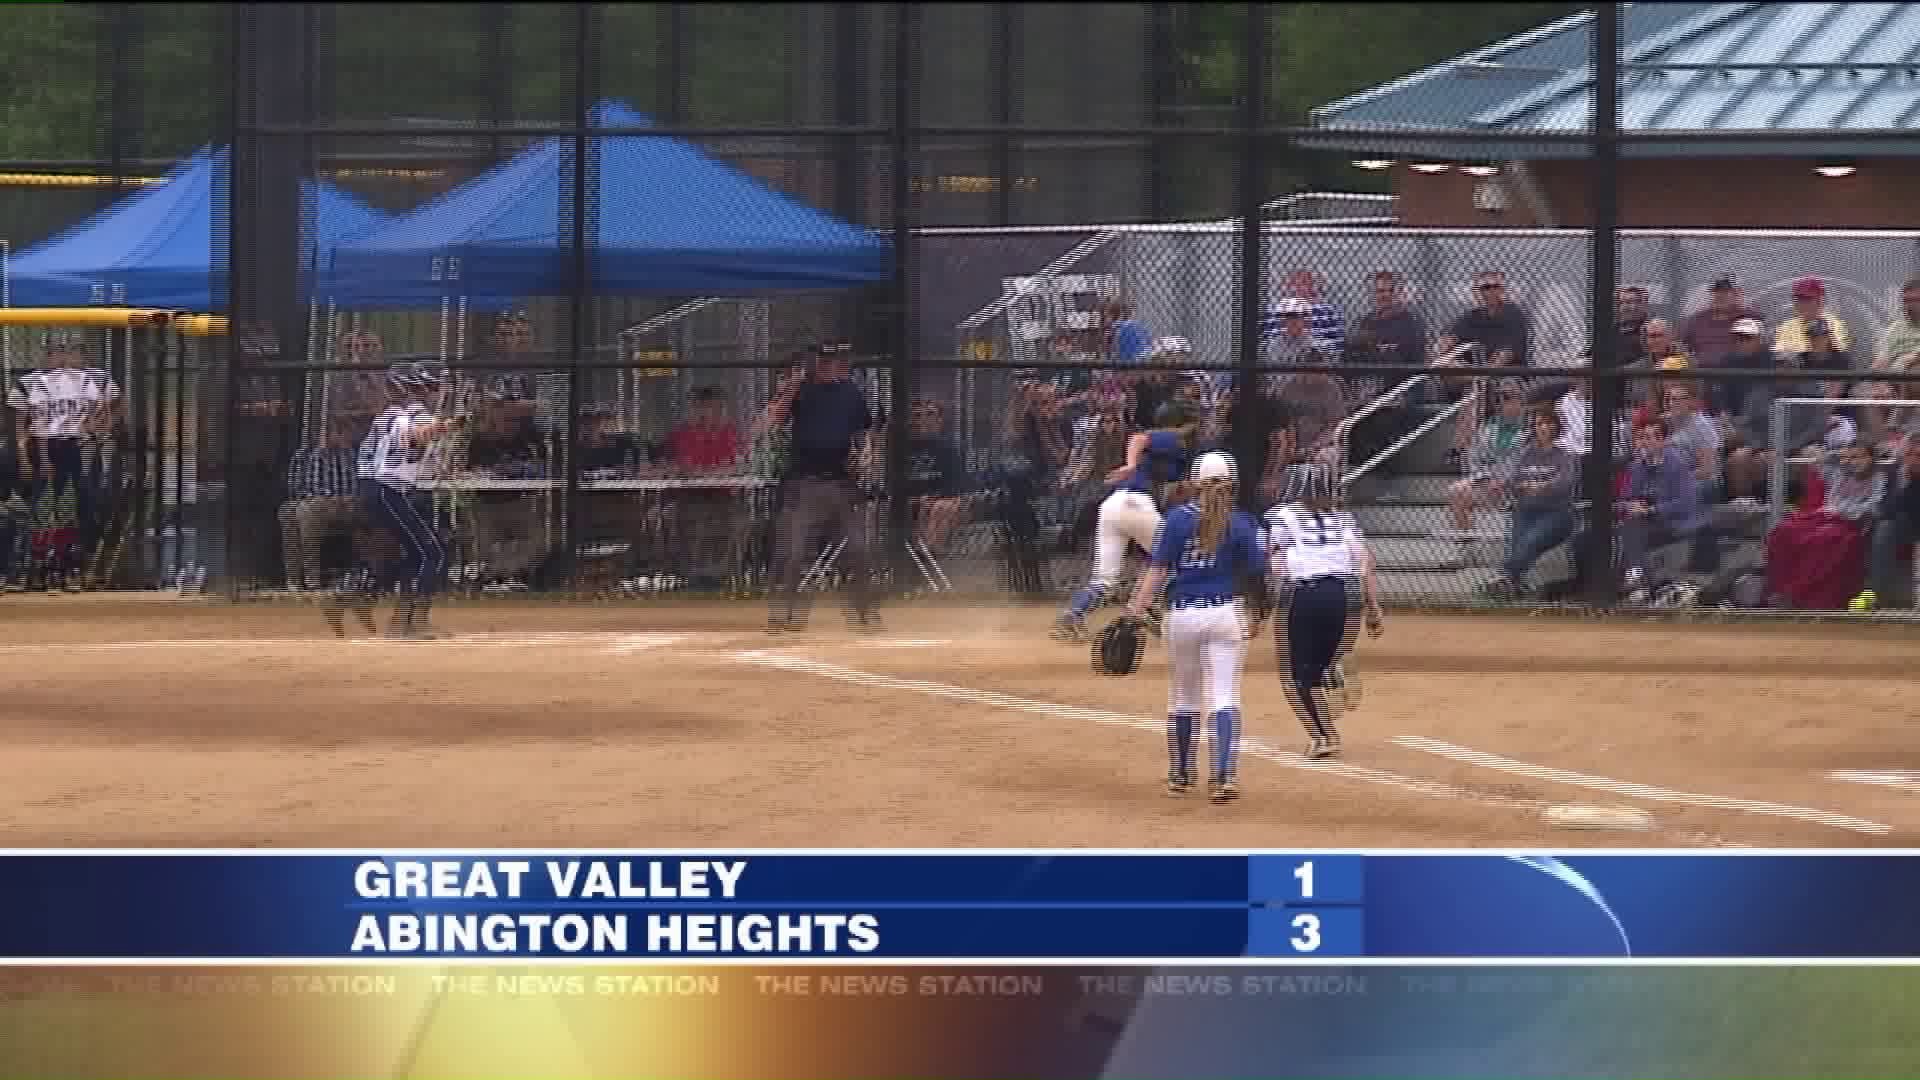 Abington Heights vs Great Valley softball